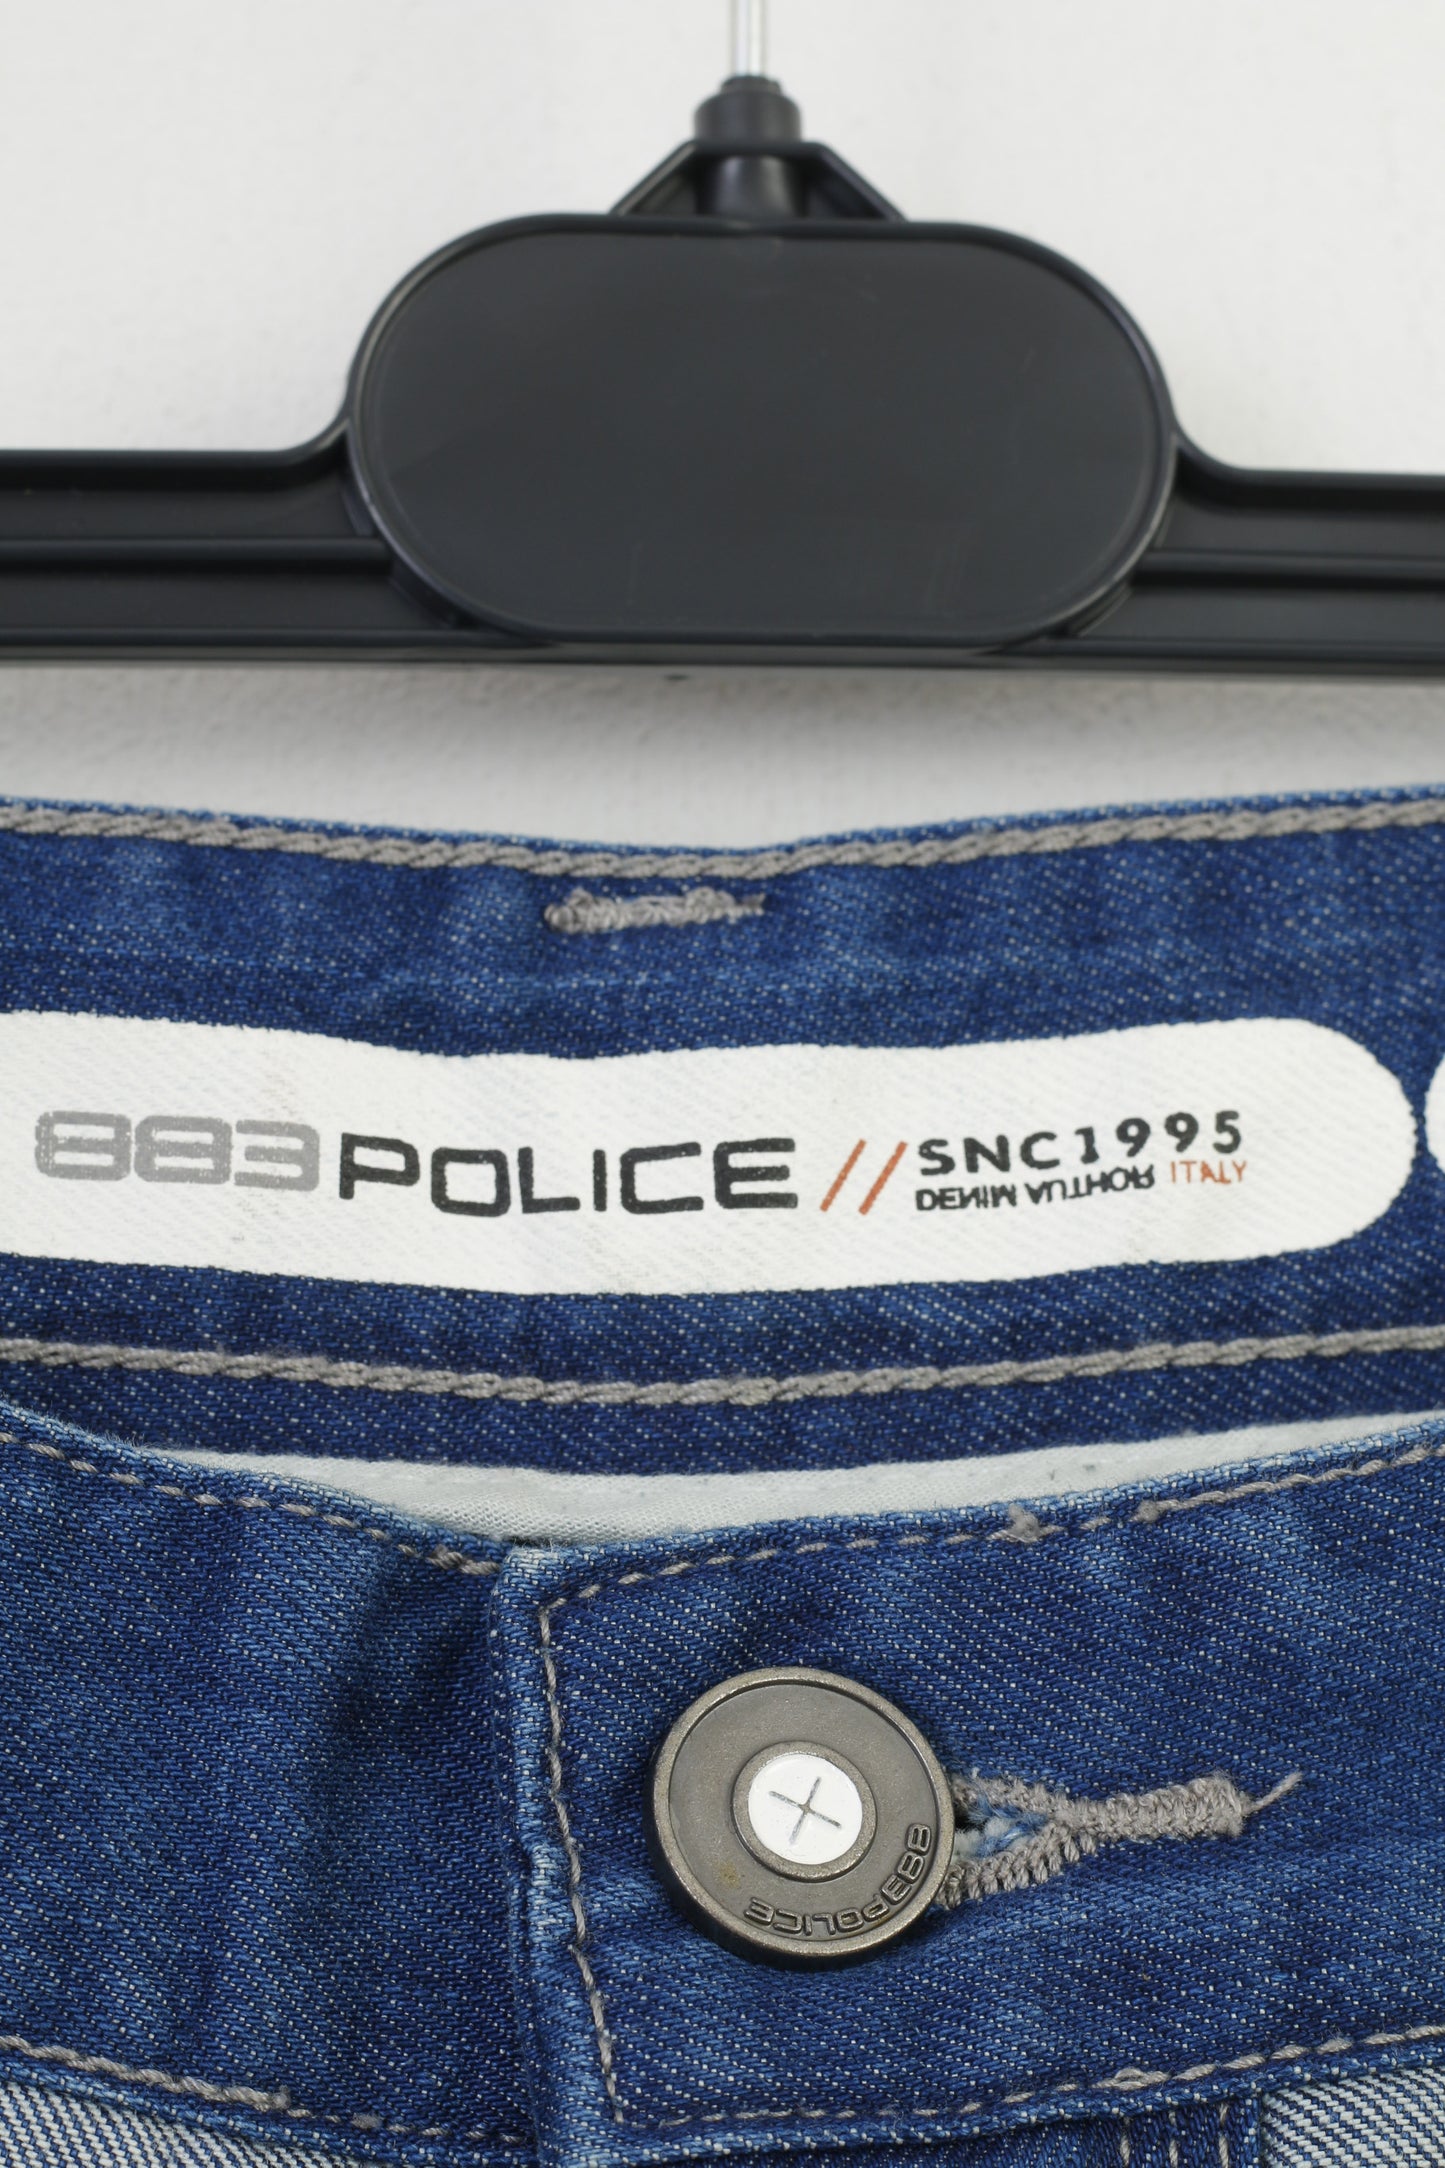 882 POLICE Homme 30 Jeans Pantalon Picolino Bleu Denim Jambe Droite Poches Zippées Pantalon